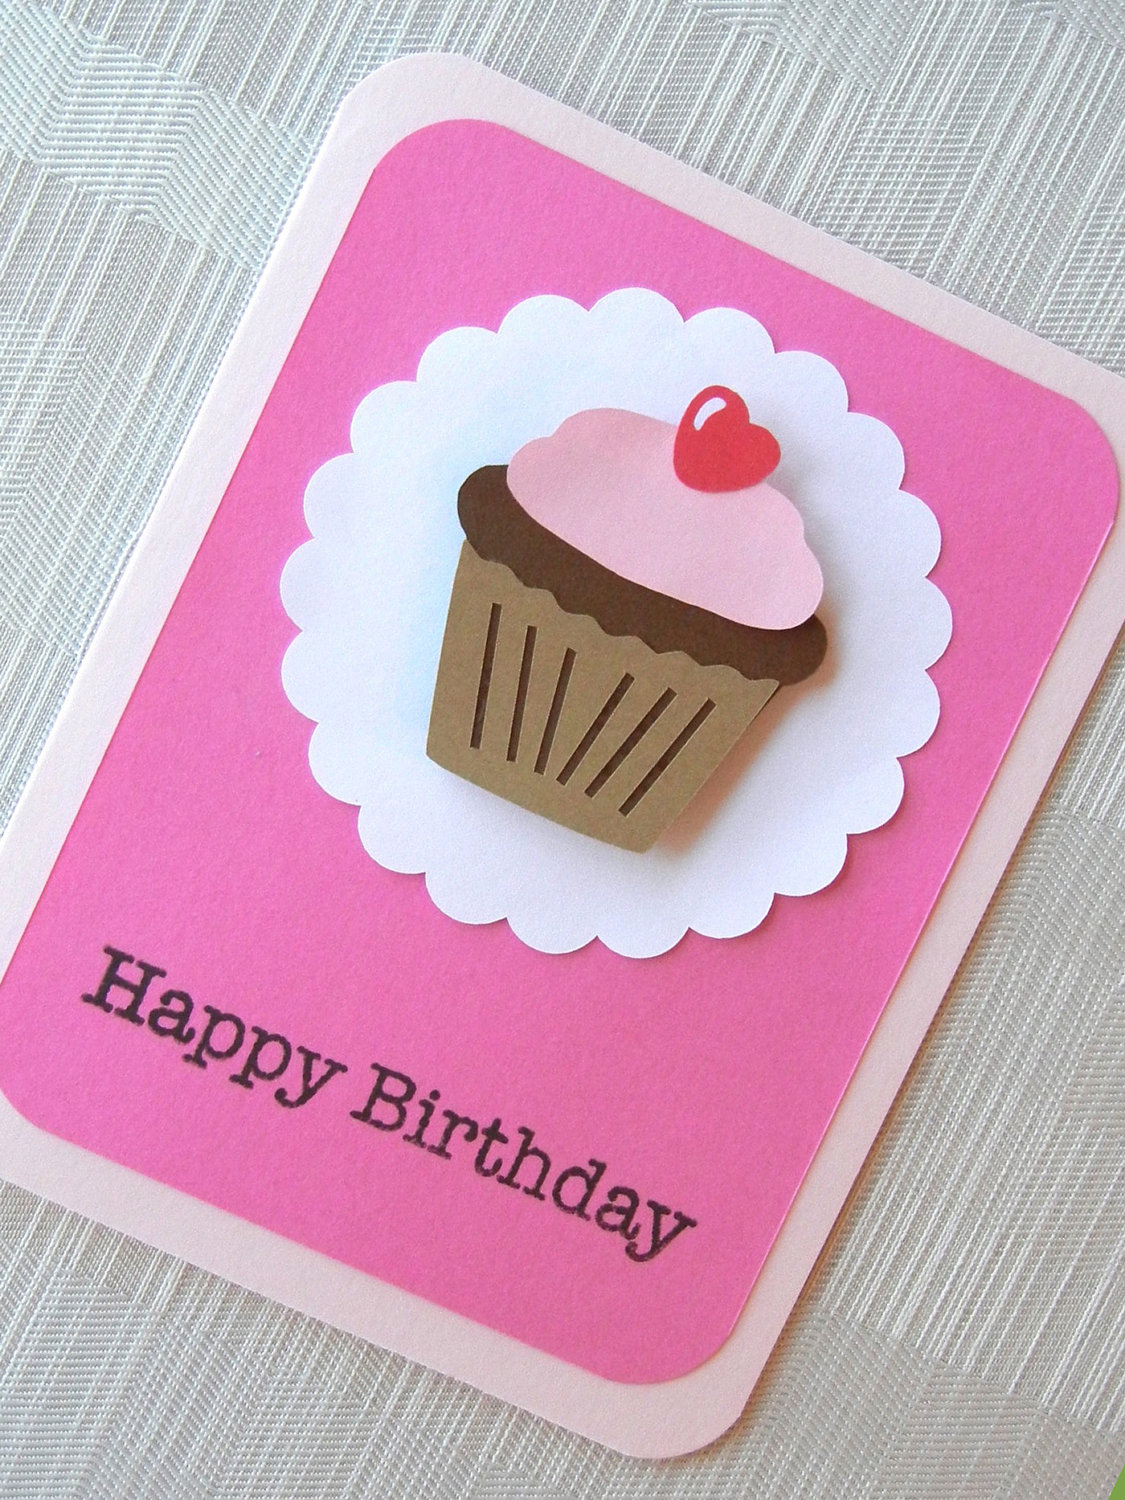 Handmade Birthday Invitation Card Ideas Easy Diy Birthday Cards Ideas And Designs